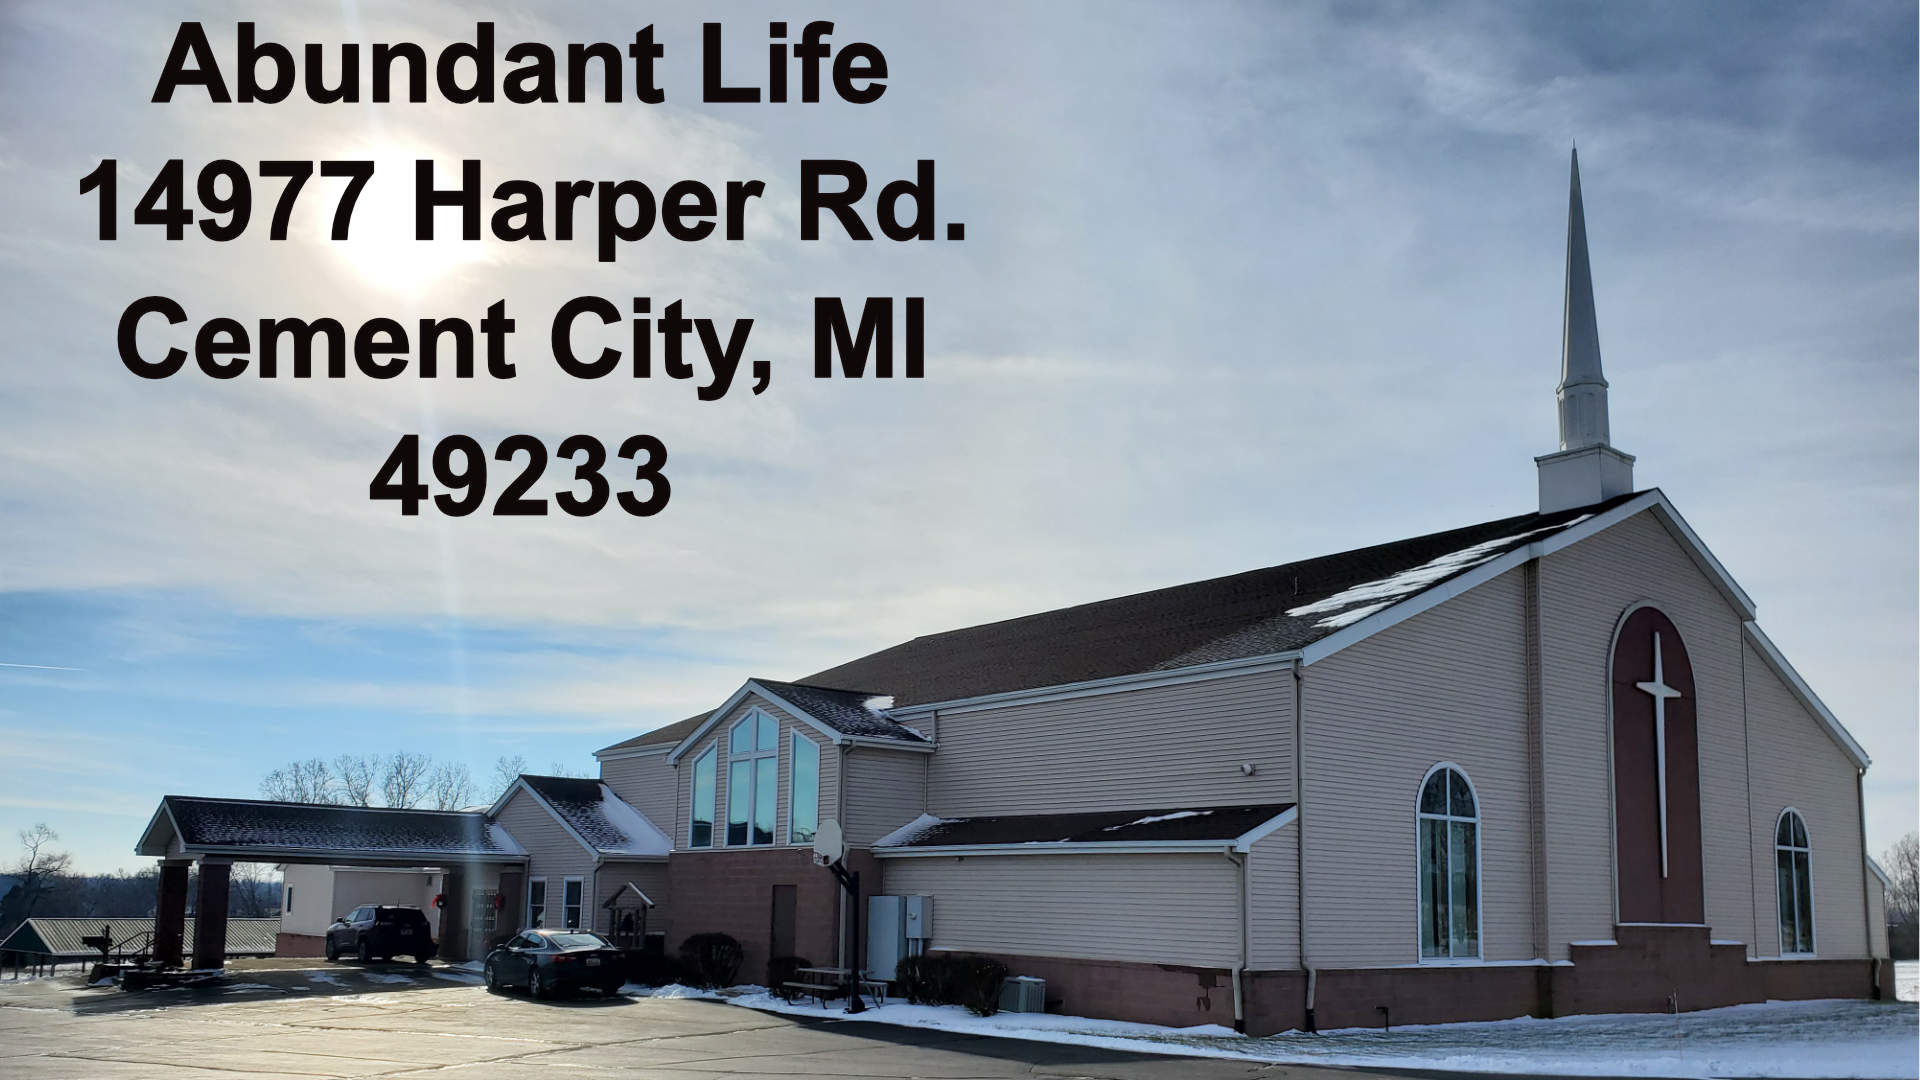 Abundant Life Harper Road